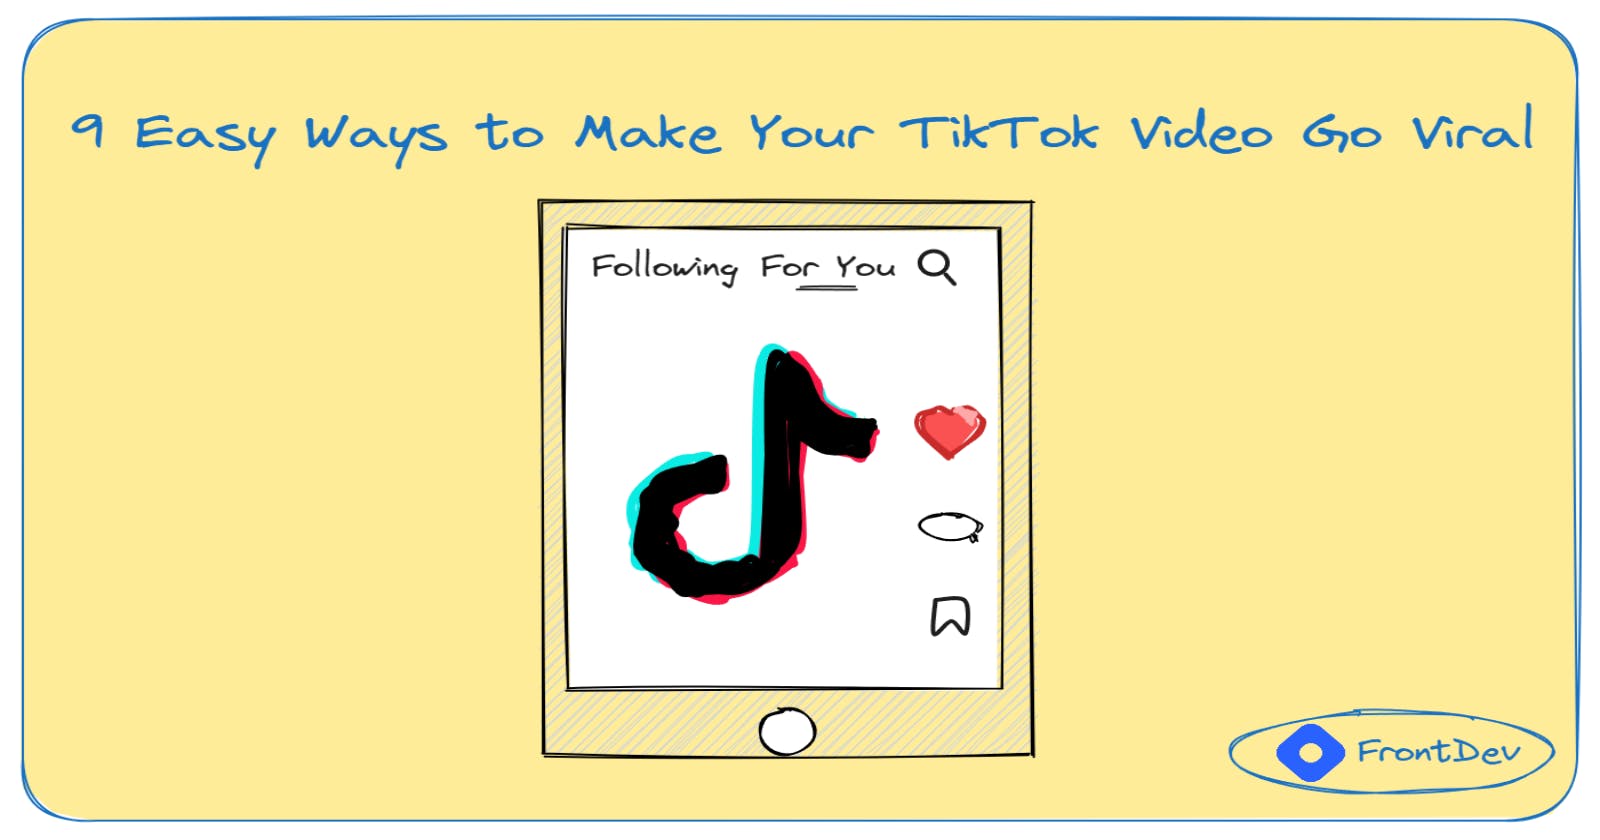 9 Easy Ways to Make Your TikTok Video Go Viral